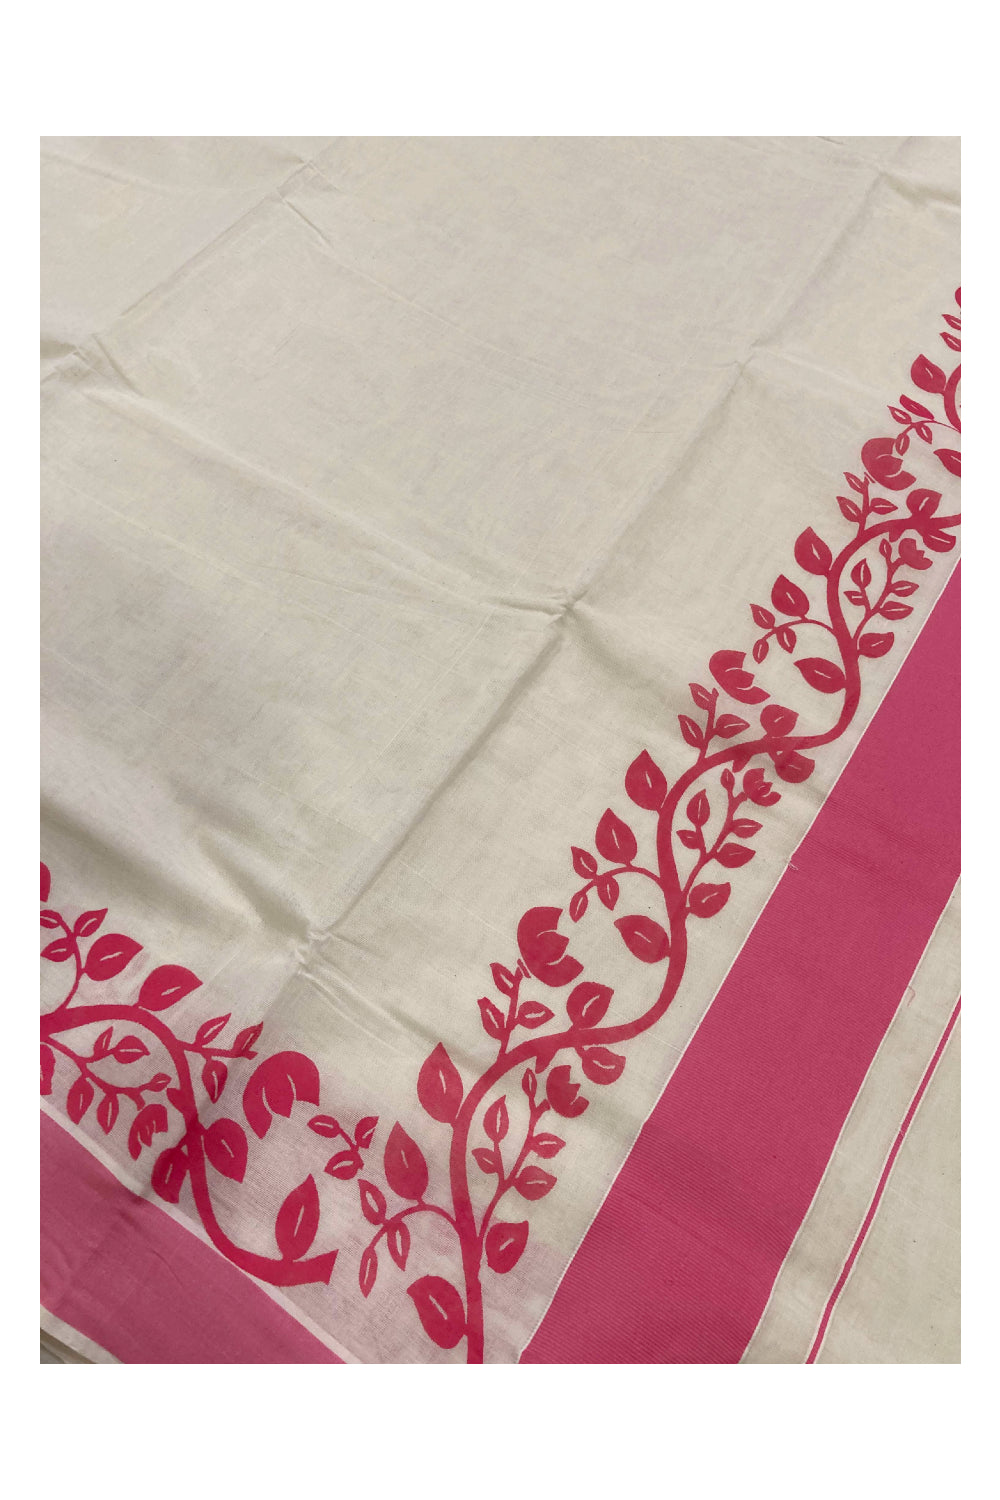 Southloom Original Design Kerala Saree with Pink Floral Vines Block Print